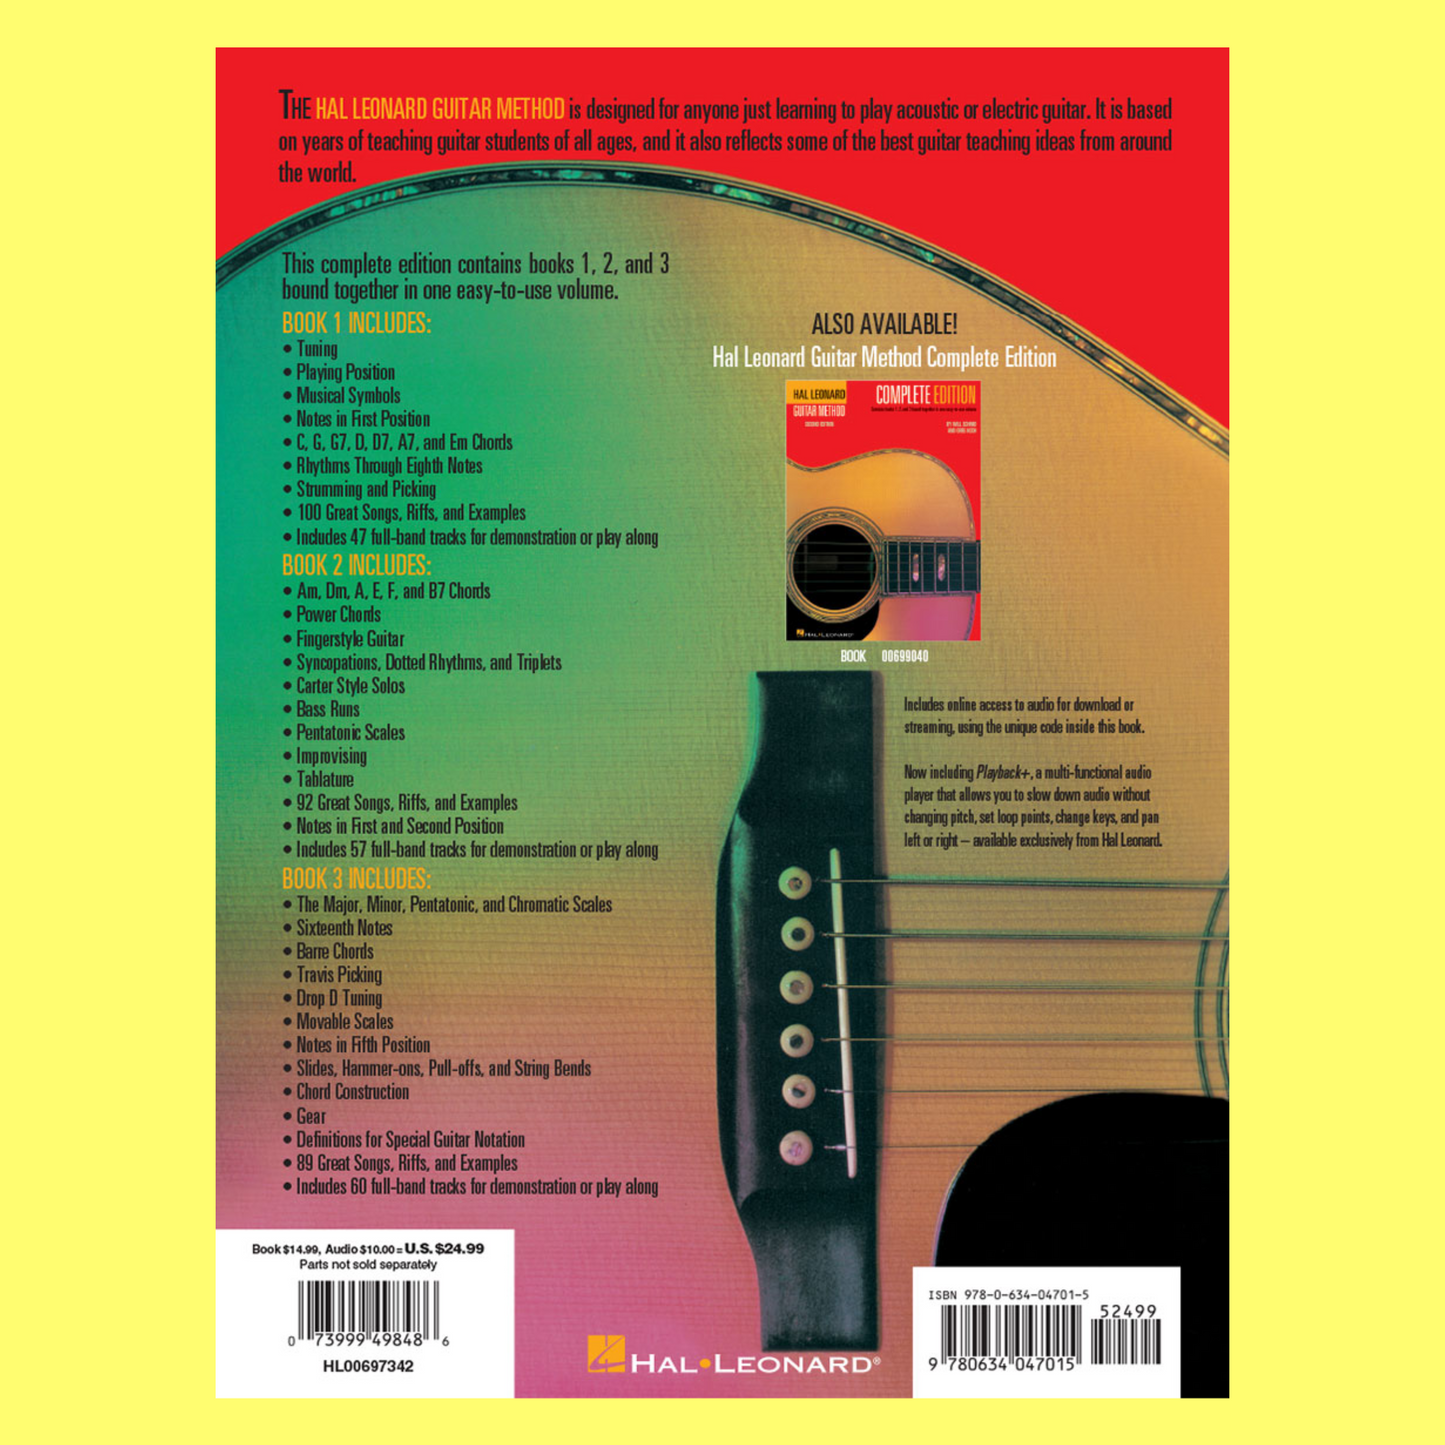 Hal Leonard Guitar Method - Complete Edition (Books 1-3 Combined/Ola)